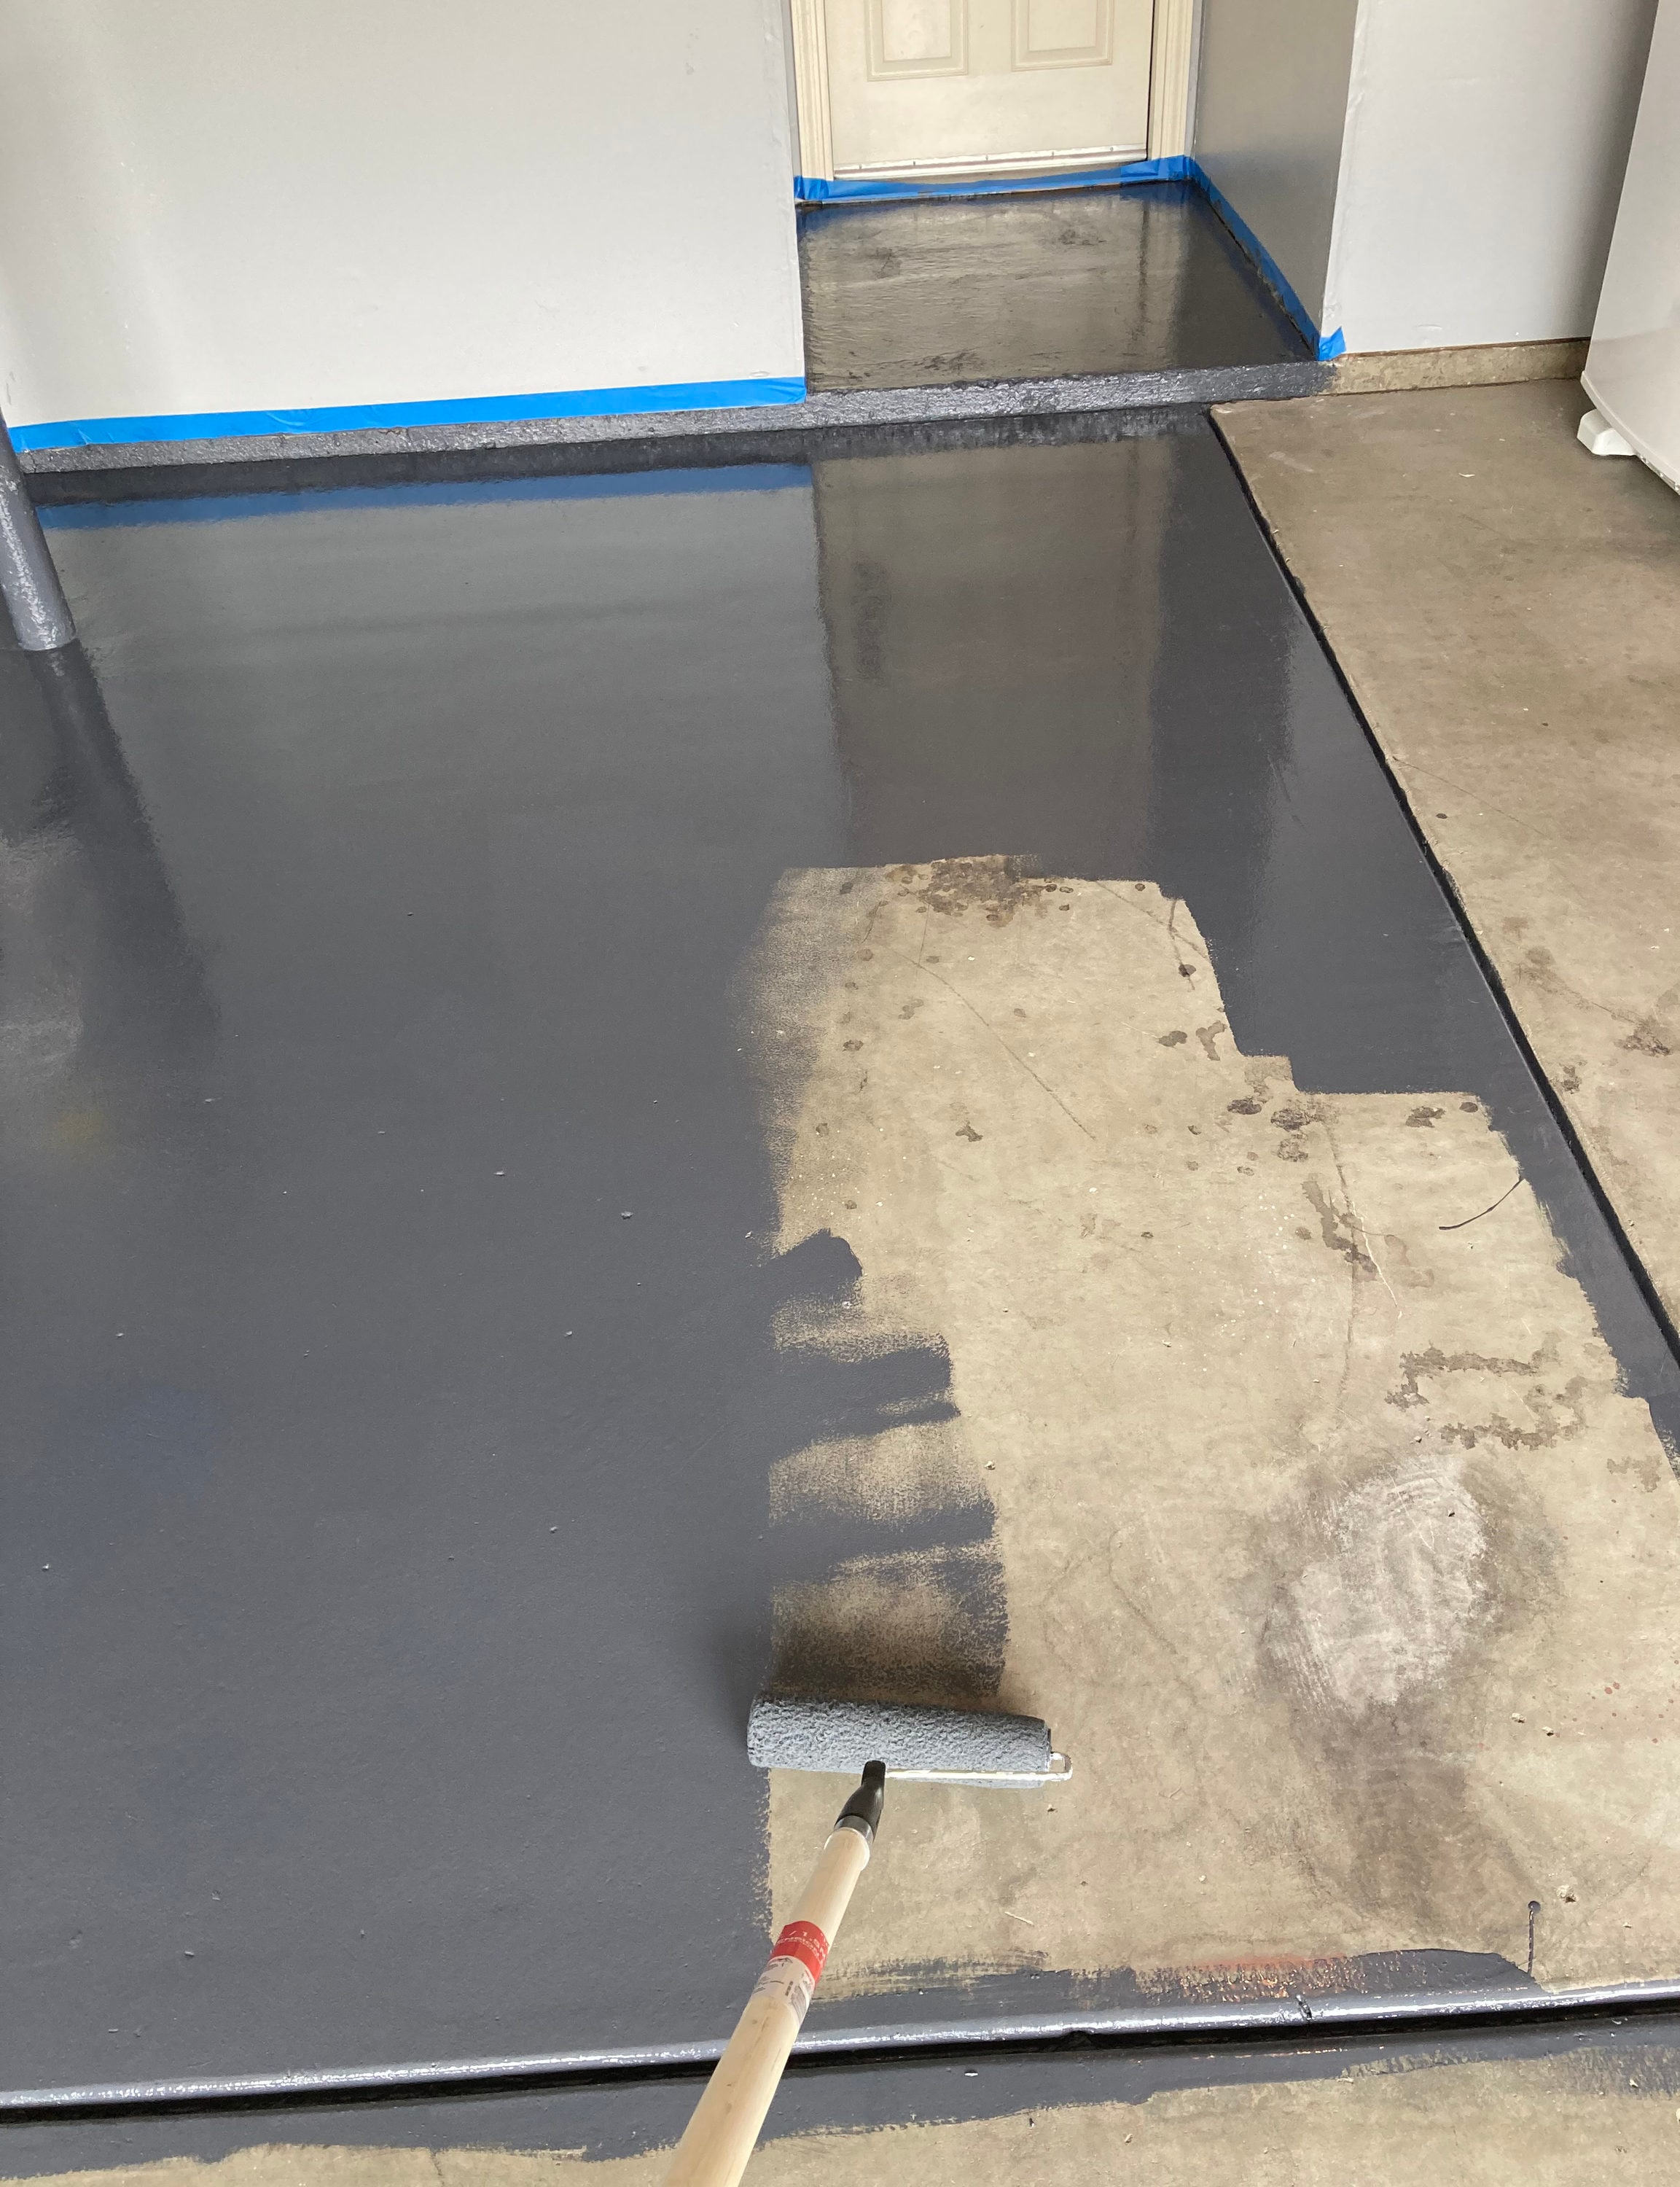 Rust Bullet 1-part Jet Black Gloss Concrete and Garage Floor Paint  (5-Gallon) in the Garage Floor Paint department at